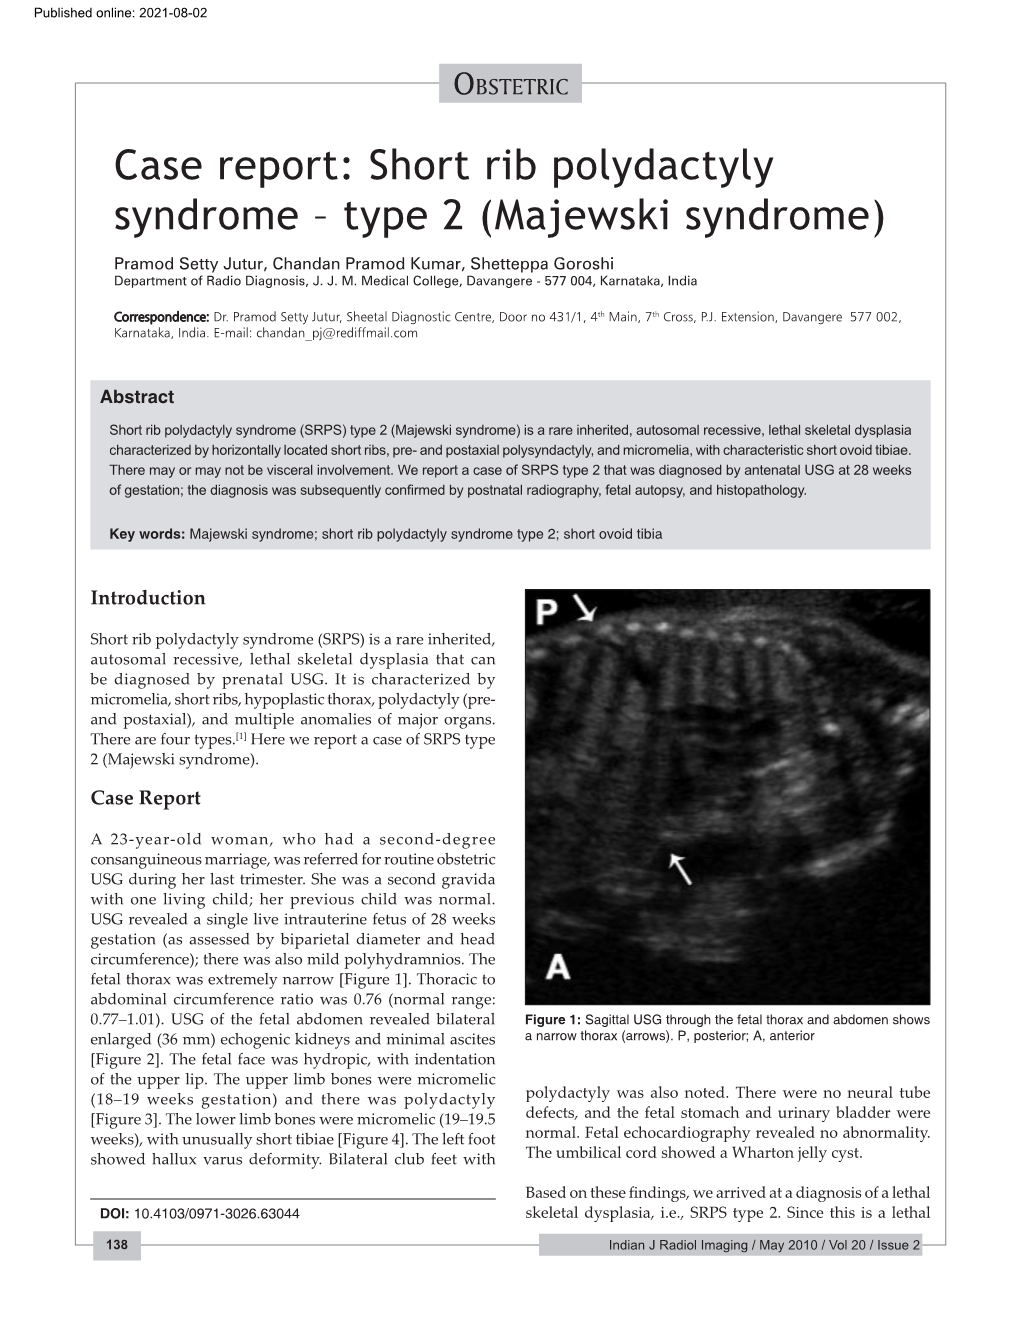 Short Rib Polydactyly Syndrome – Type 2 (Majewski Syndrome) Pramod Setty Jutur, Chandan Pramod Kumar, Shetteppa Goroshi Department of Radio Diagnosis, J